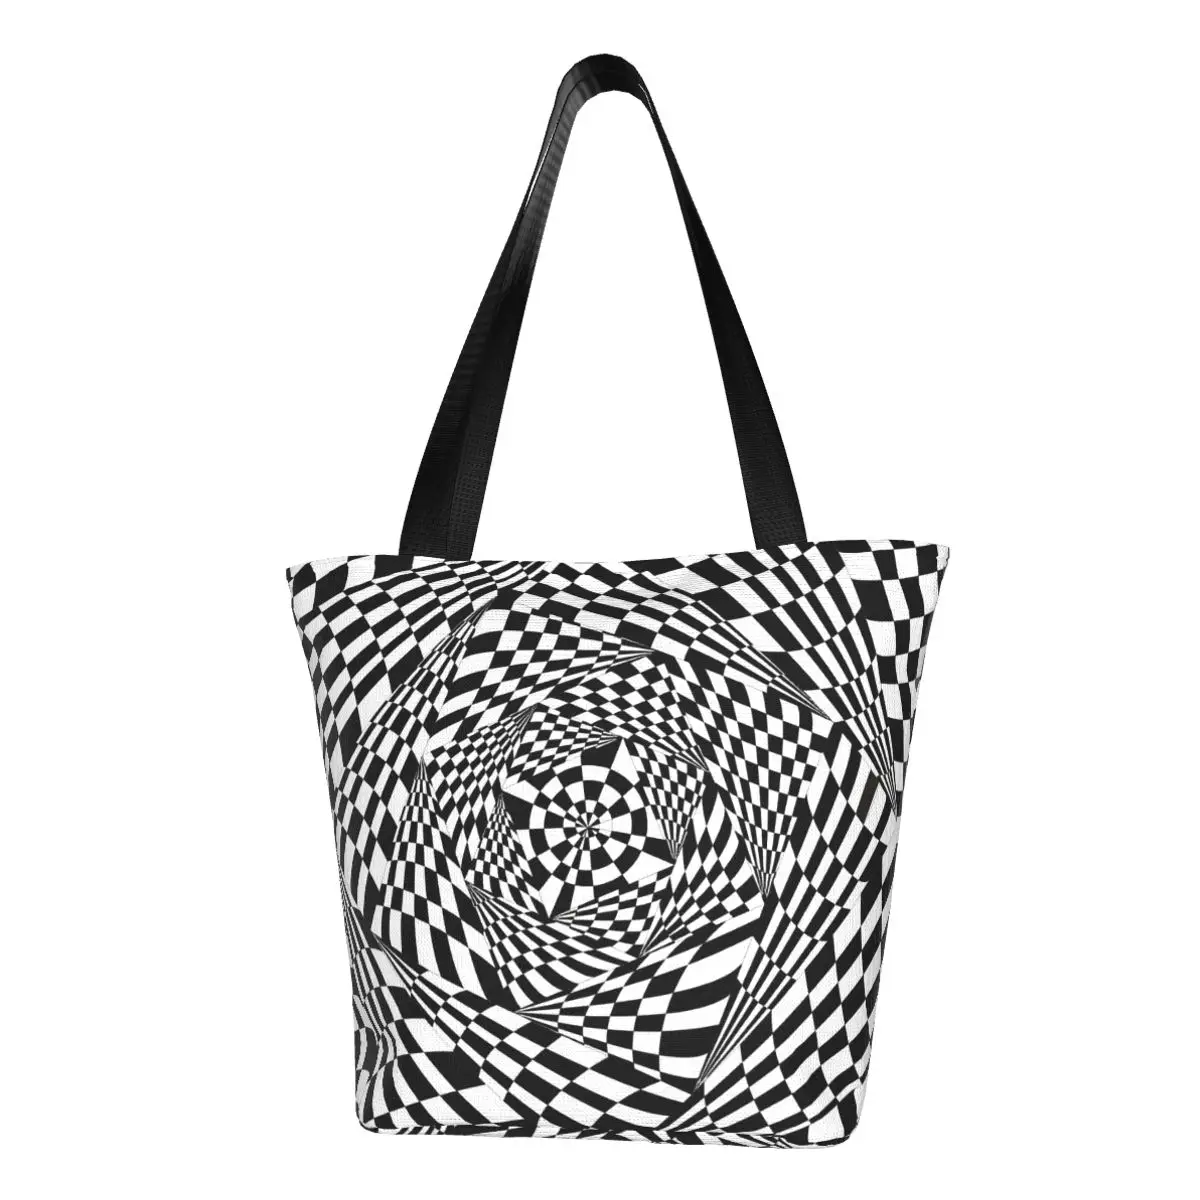 3D Stereo Vision Shopping Bag Aesthetic Cloth Outdoor Handbag Female Fashion Bags